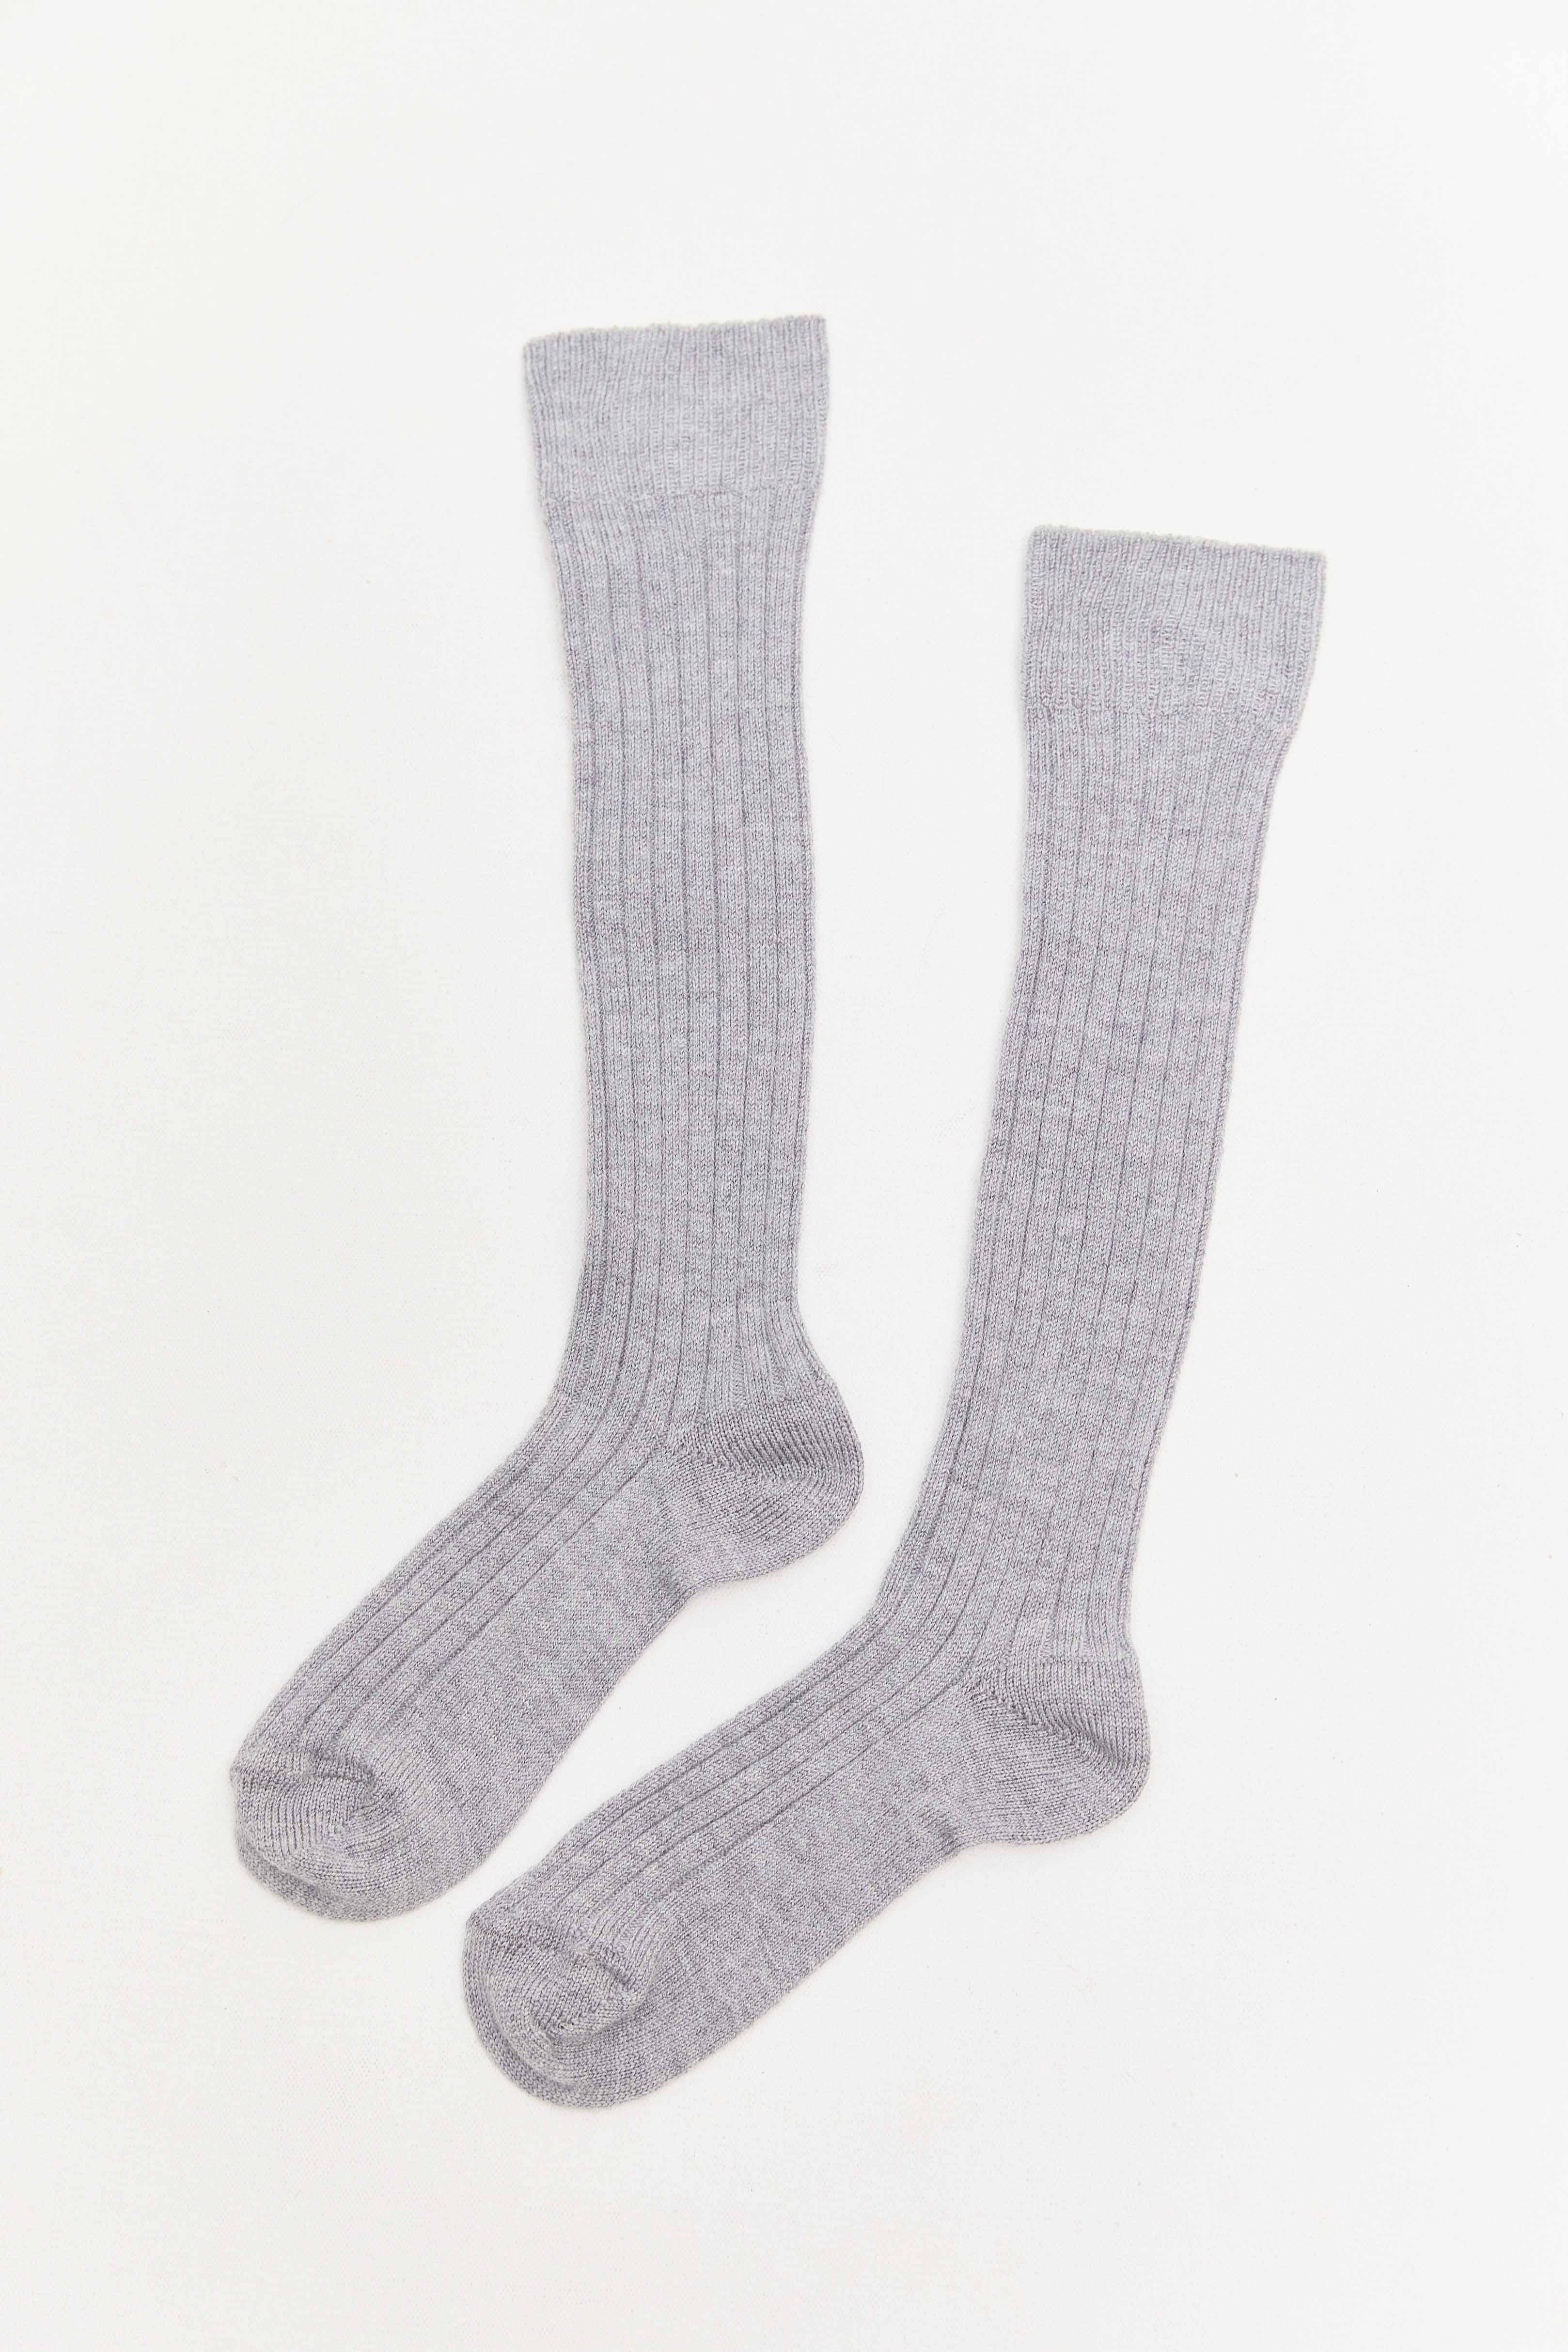 Maria La Rosa's Soft College Socks.